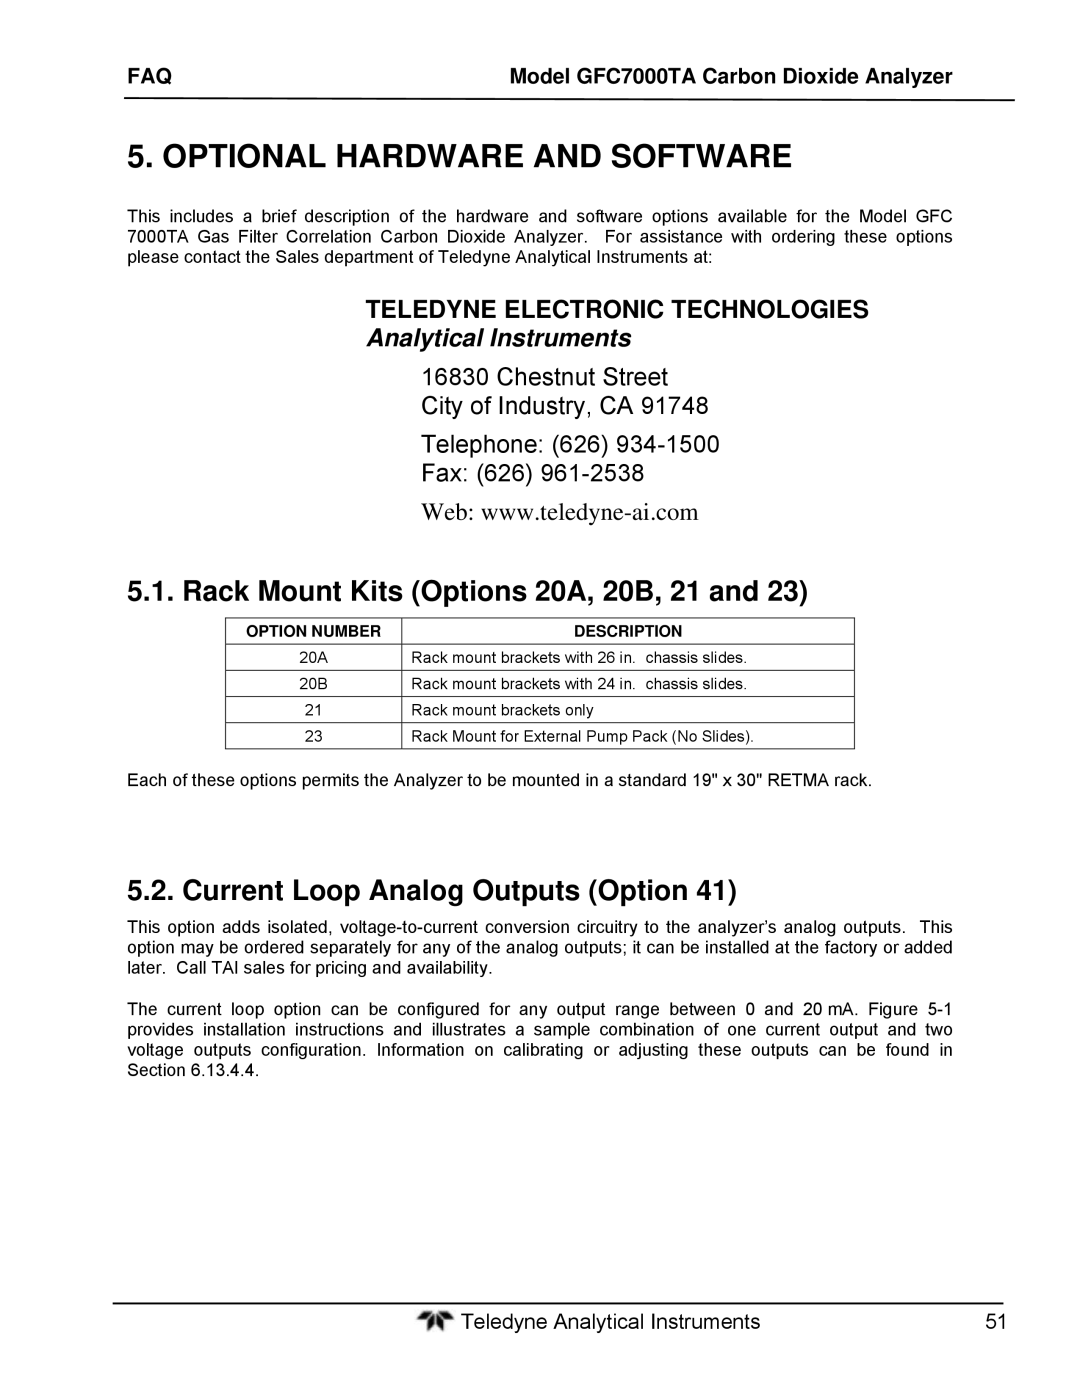 Teledyne gfc 7000ta Rack Mount Kits Options 20A, 20B, 21, Current Loop Analog Outputs Option, Option Number Description 